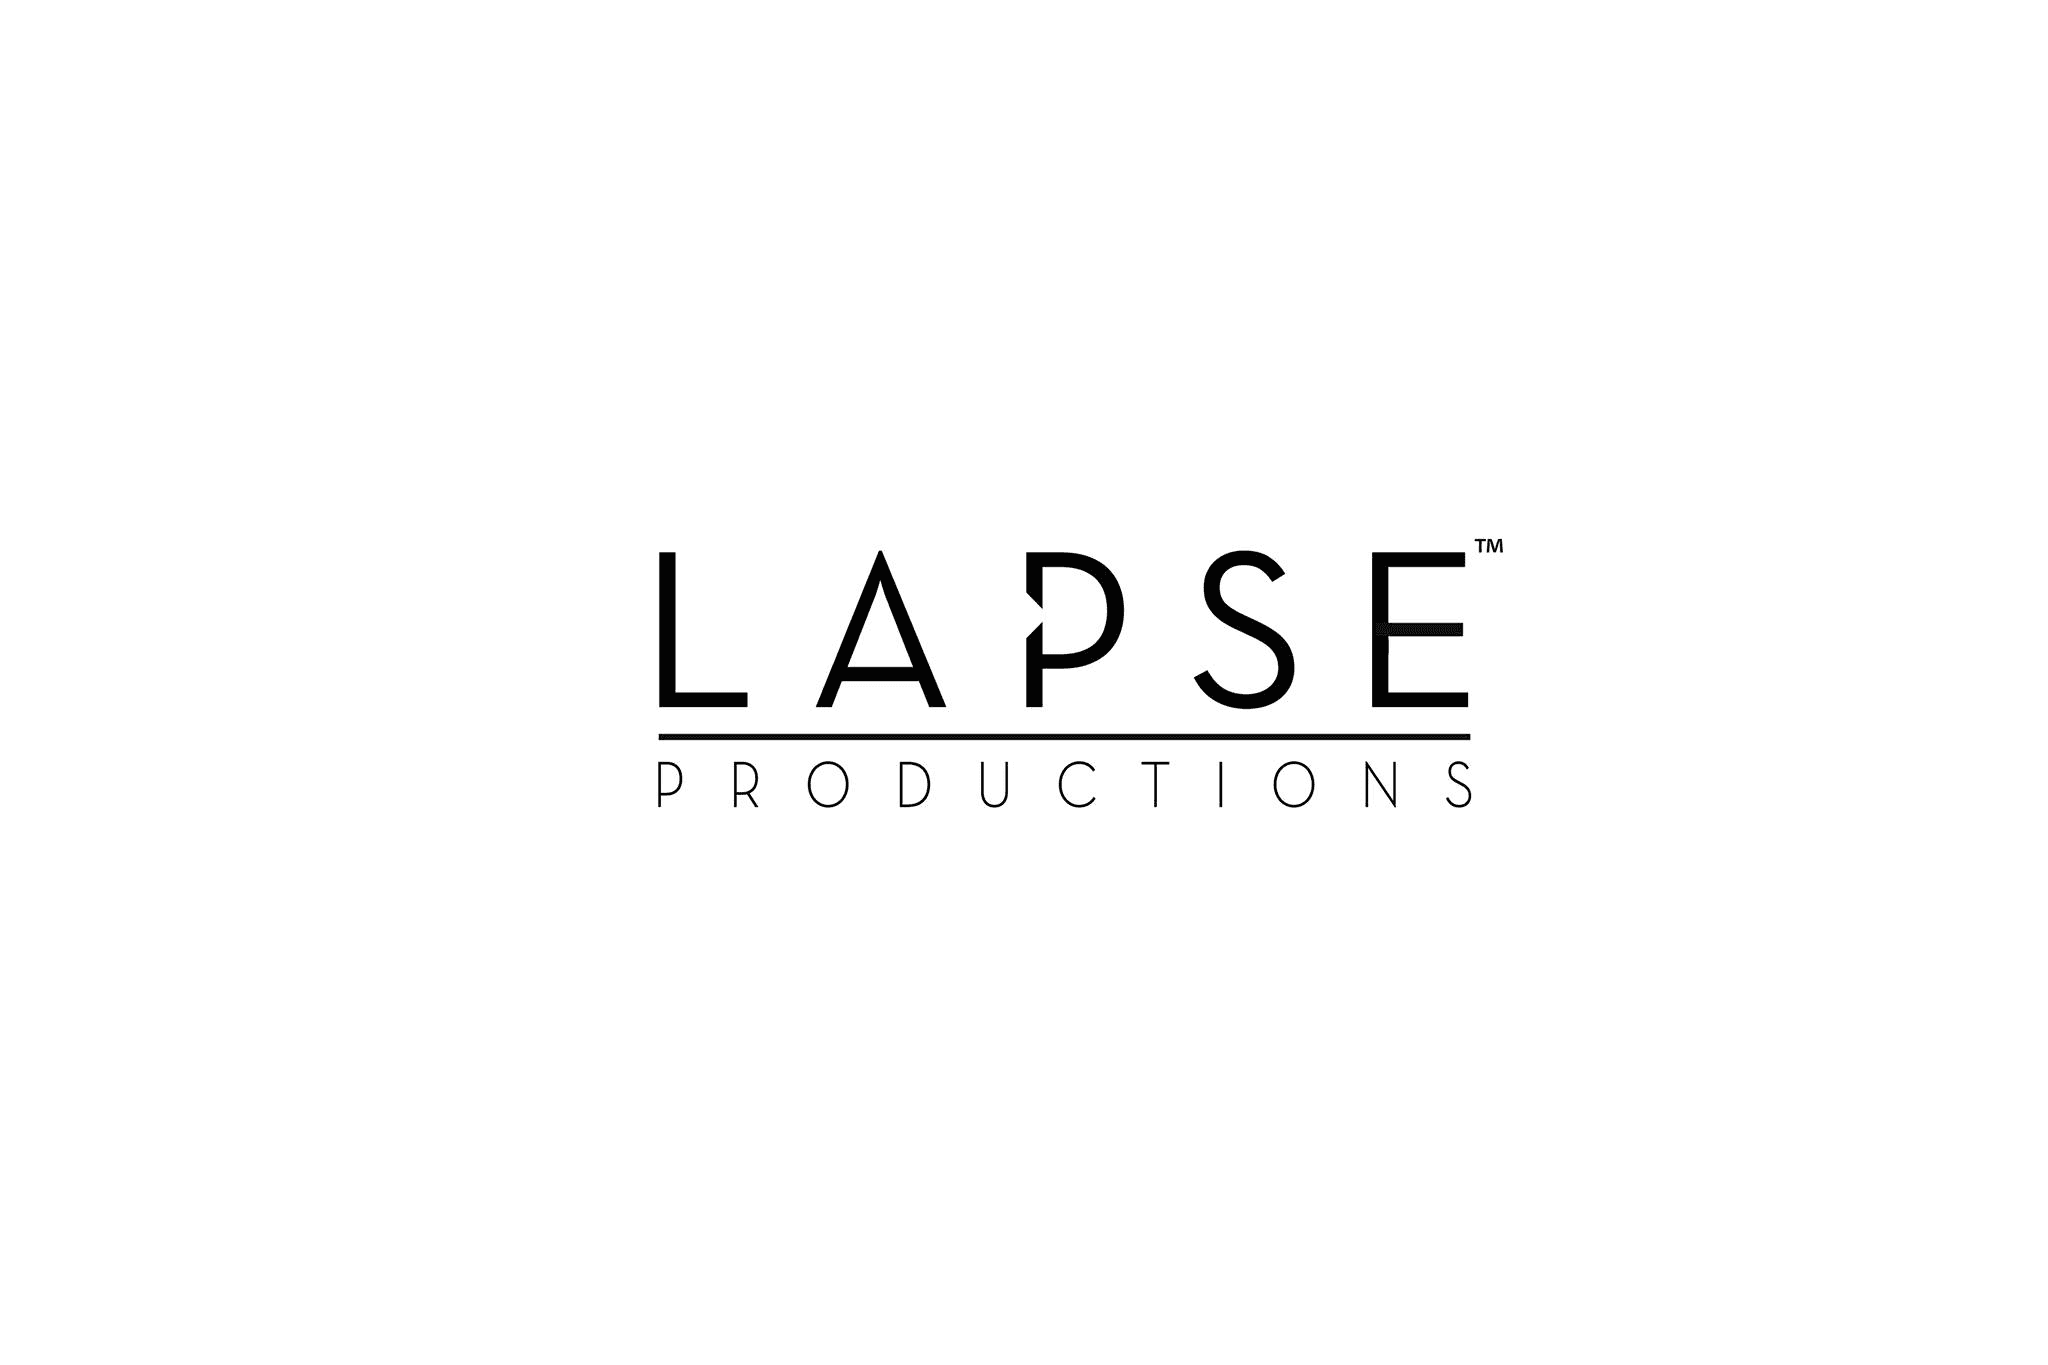 LapseProductions